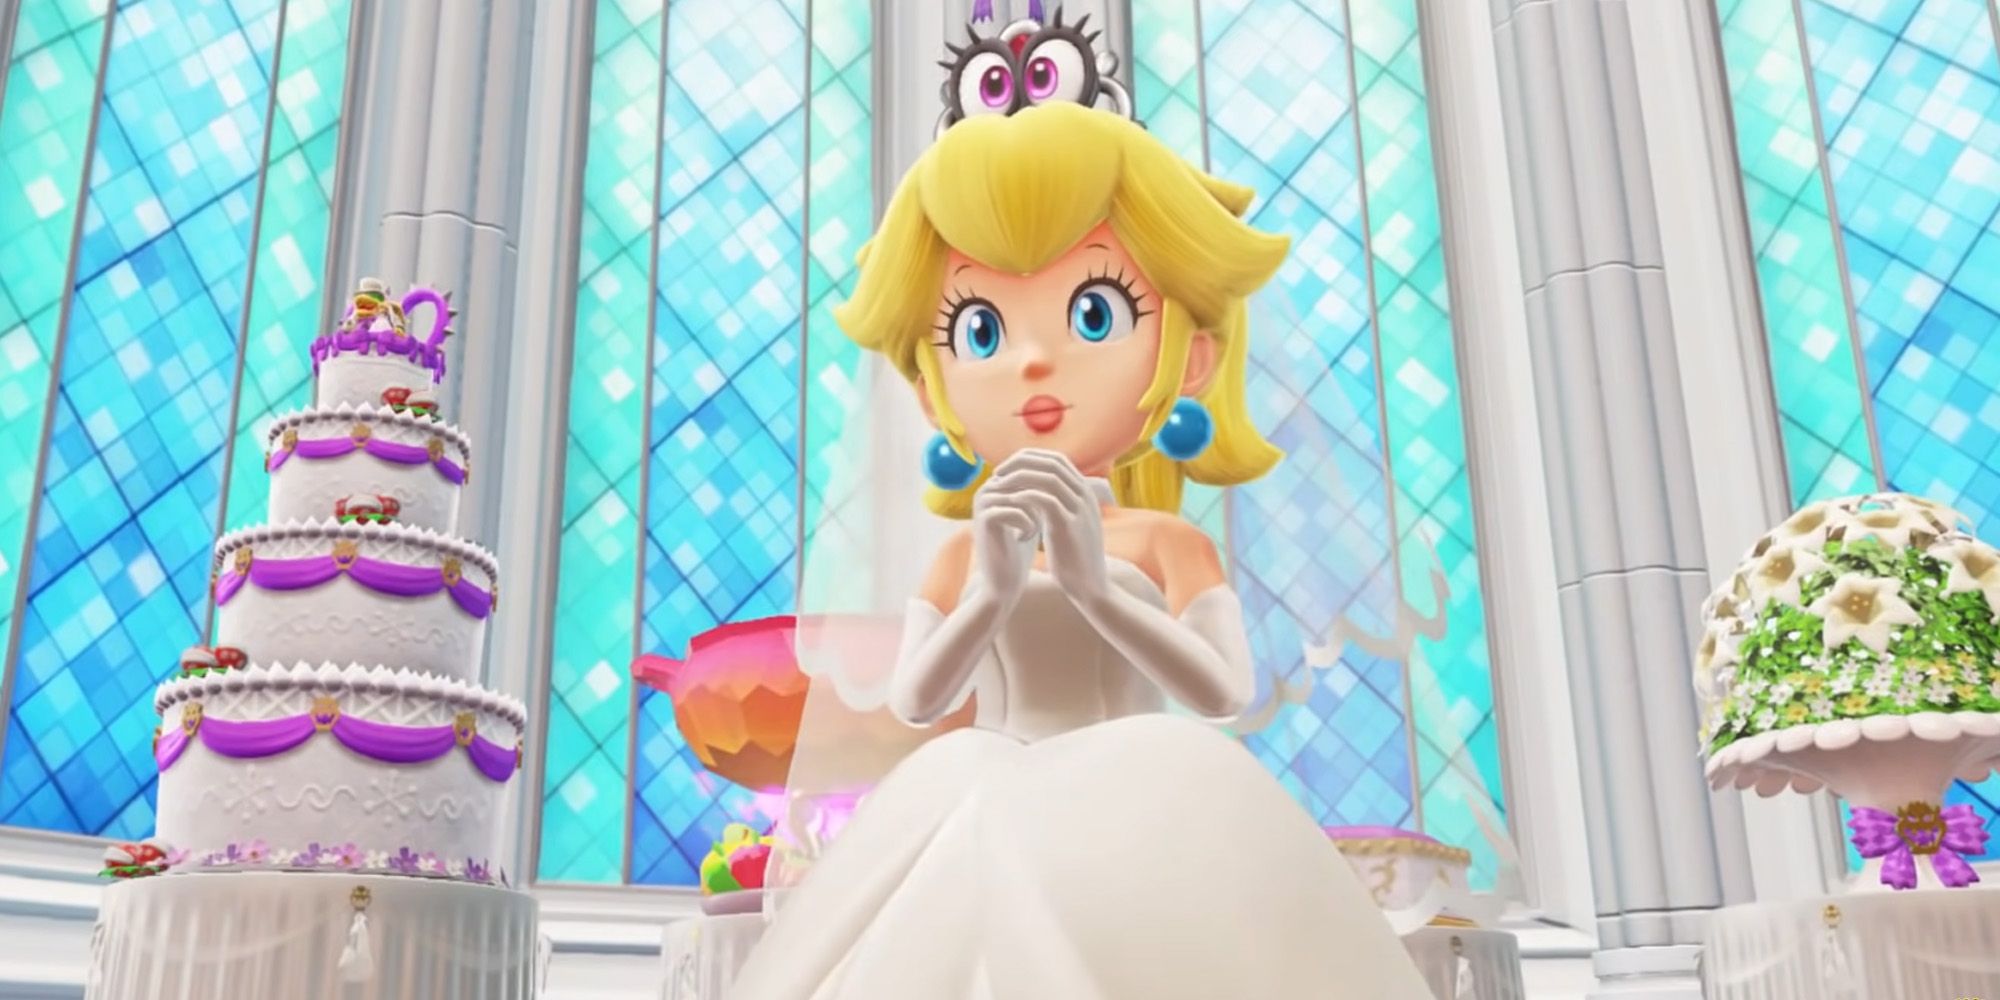 Princess Peach in a wedding dress in Super Mario Odyssey